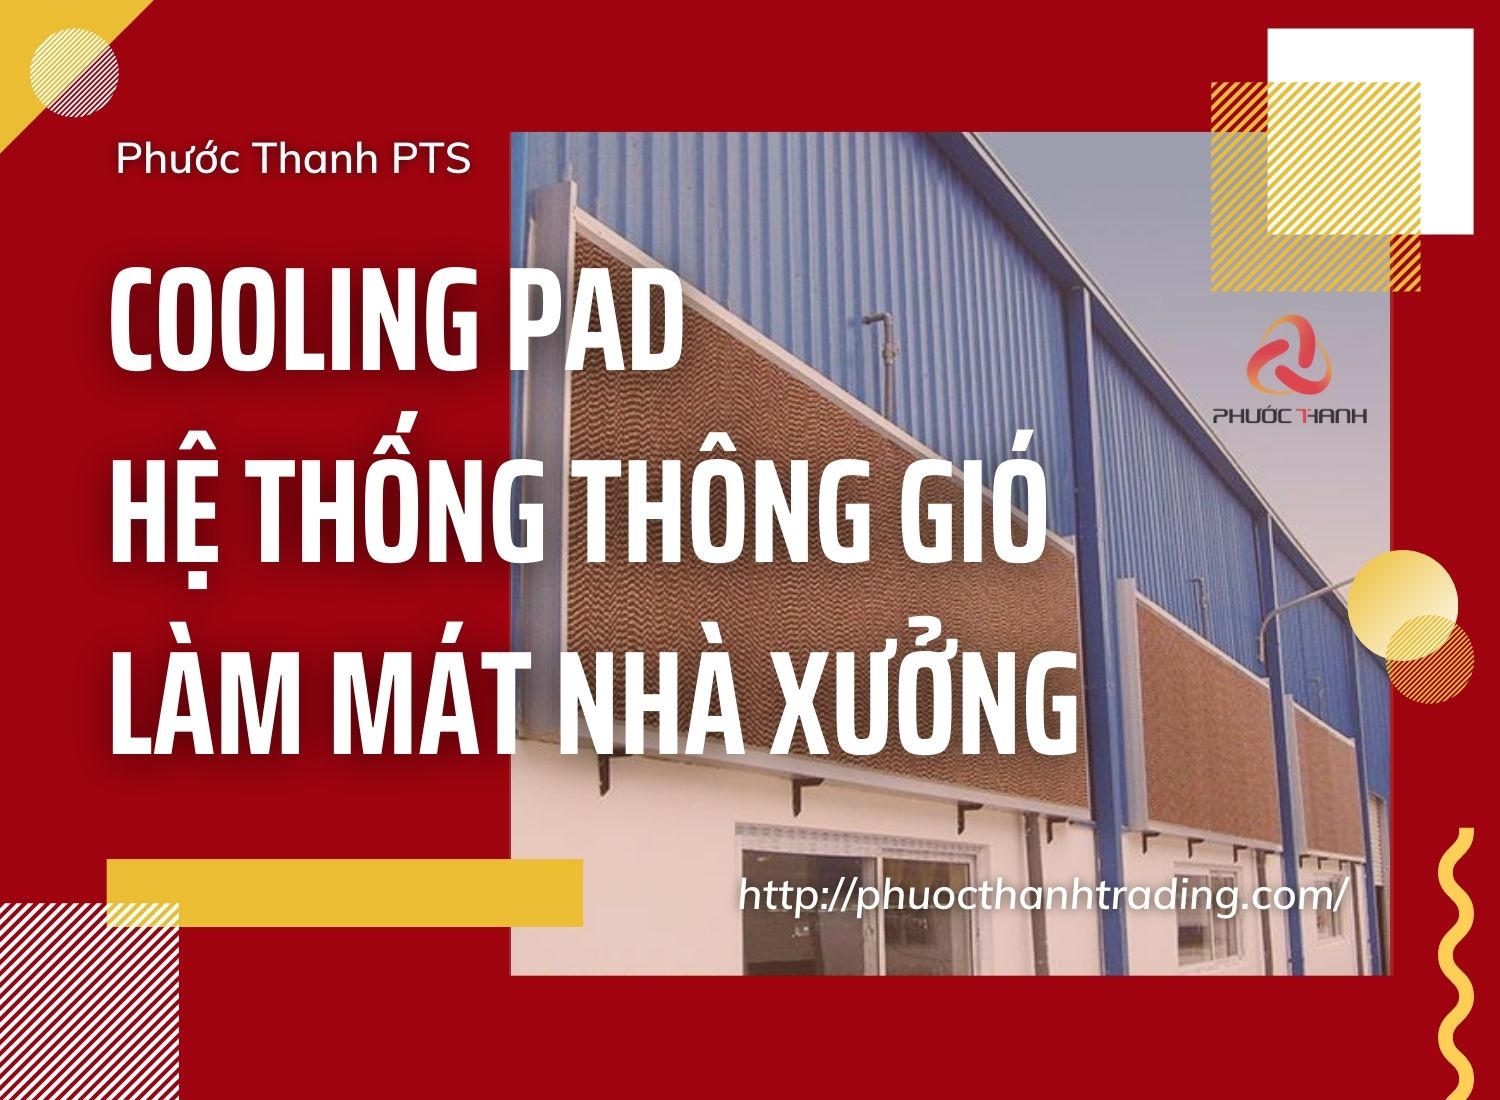 Cooling-pad-he-thong-thong-gio-lam-mat-nha-xuong-Phuoc-Thanh